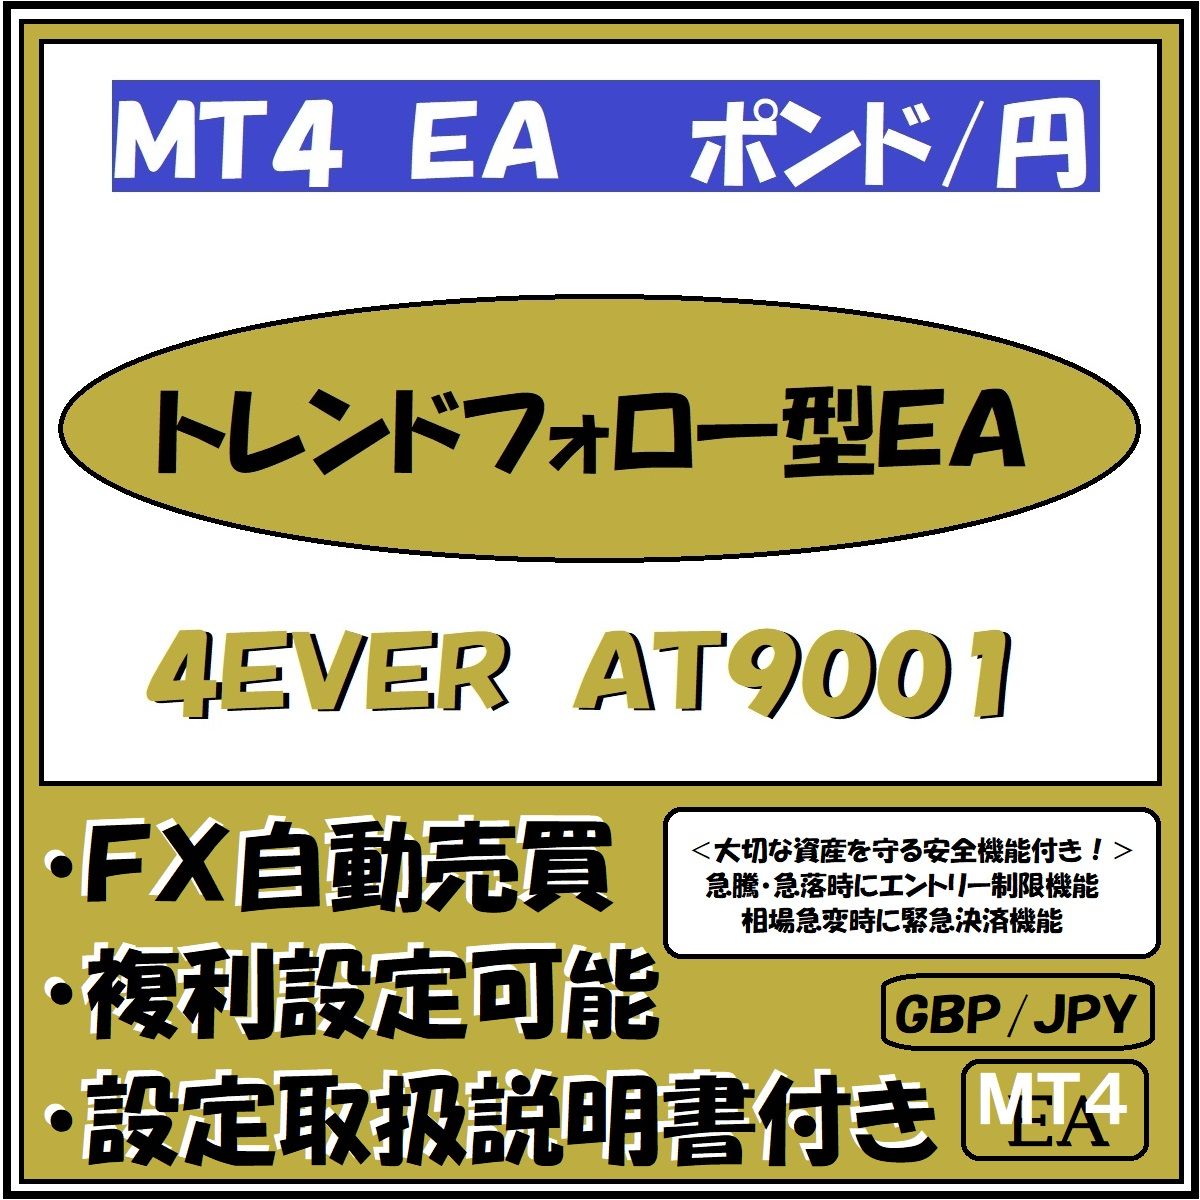 GBP-JPY　4EVER　AT9001（ポンド円　トレンドフォロー型安全運用機能付きＥＡ） 自動売買